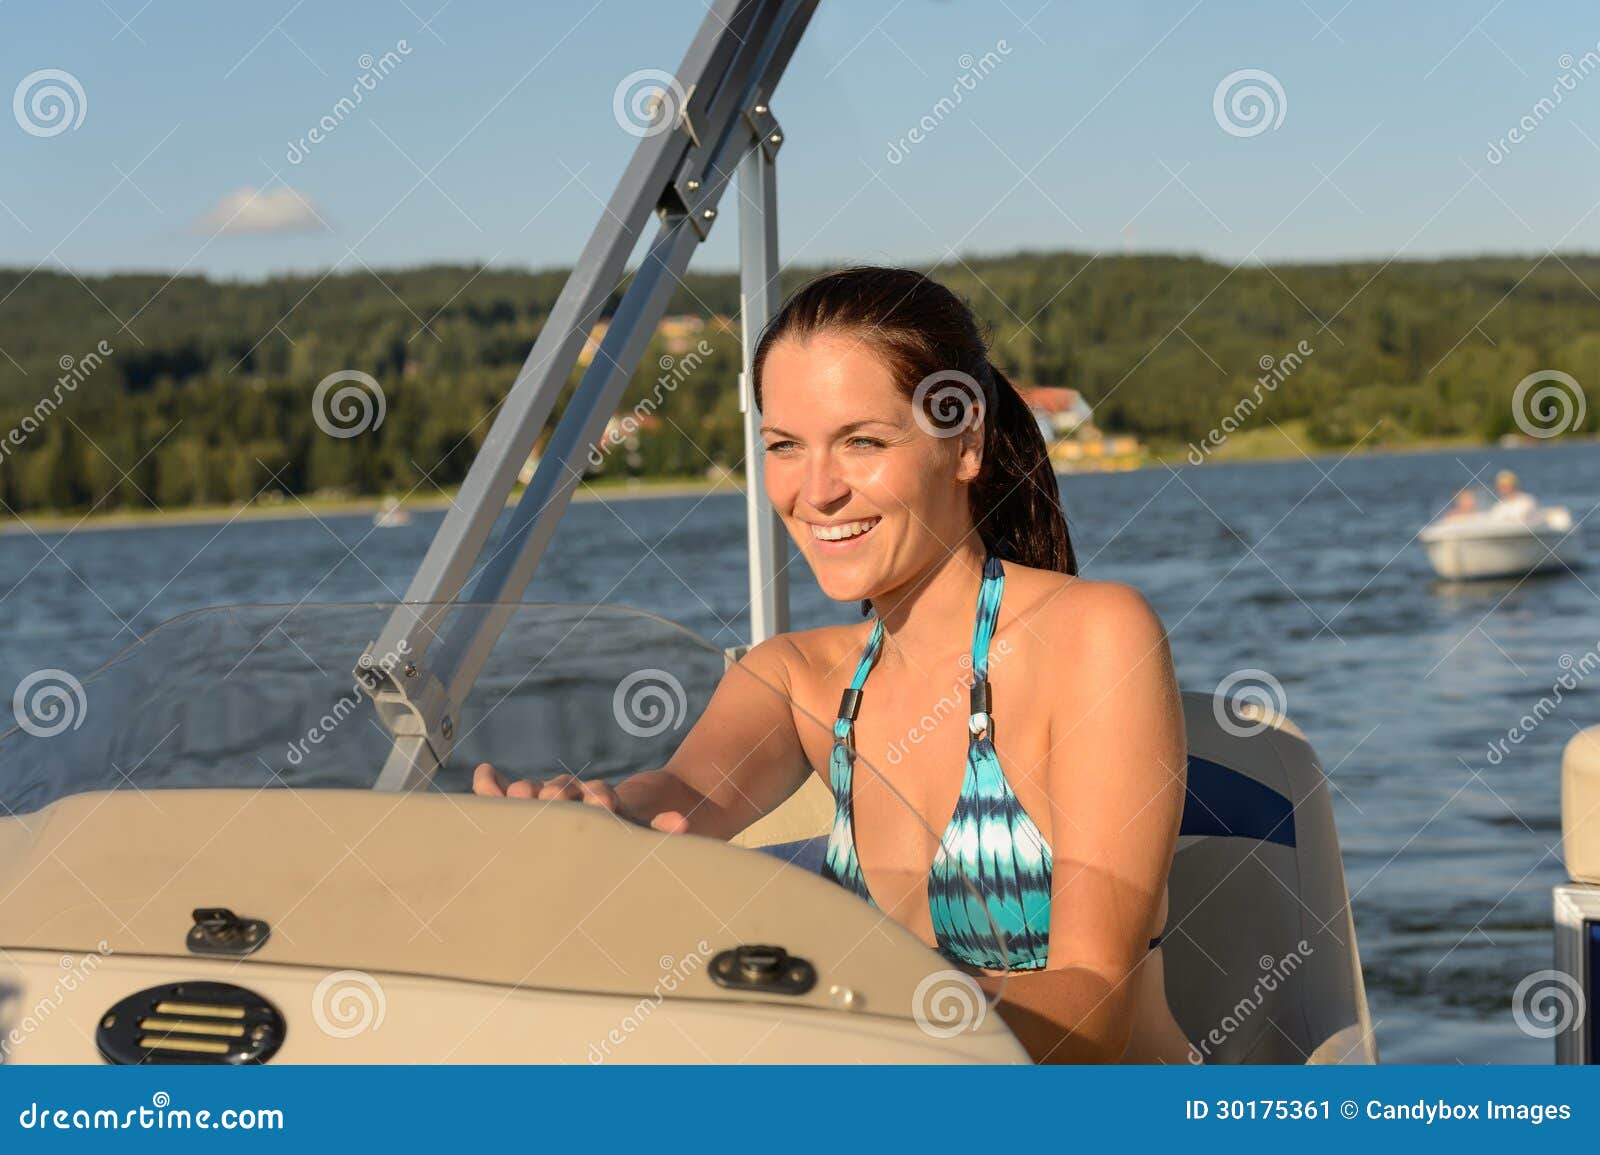 cheerful woman navigating powerboat in summer